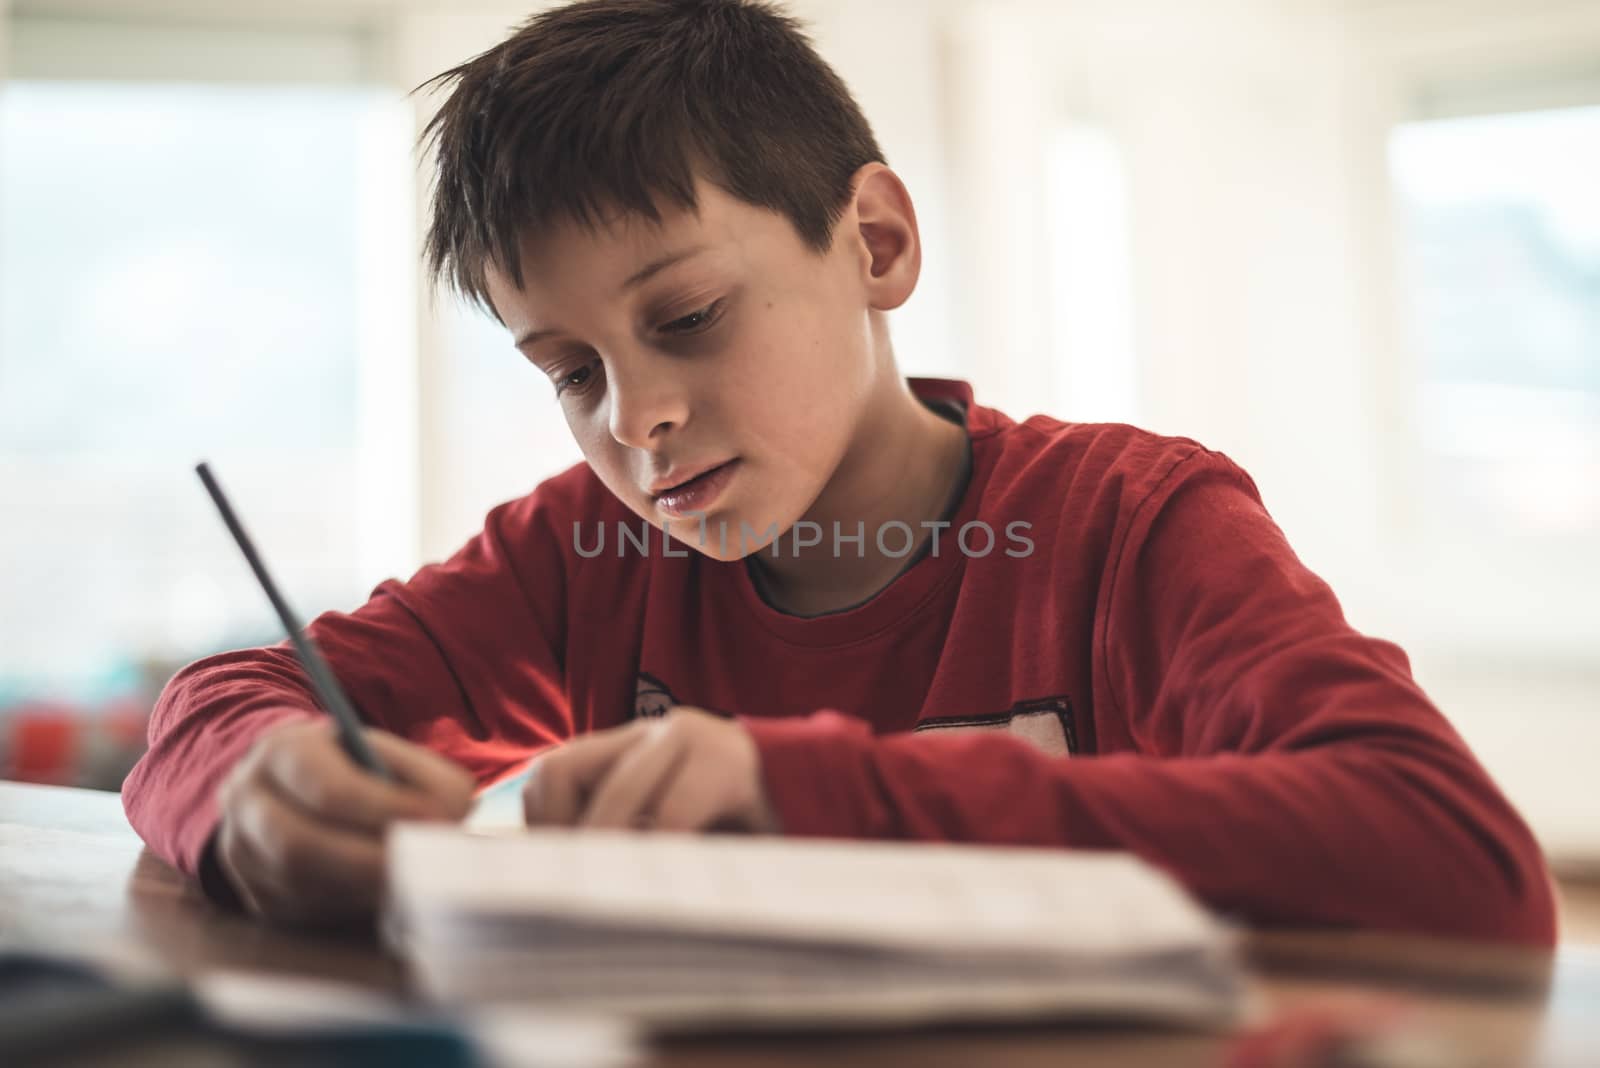 Boy doing homework at home